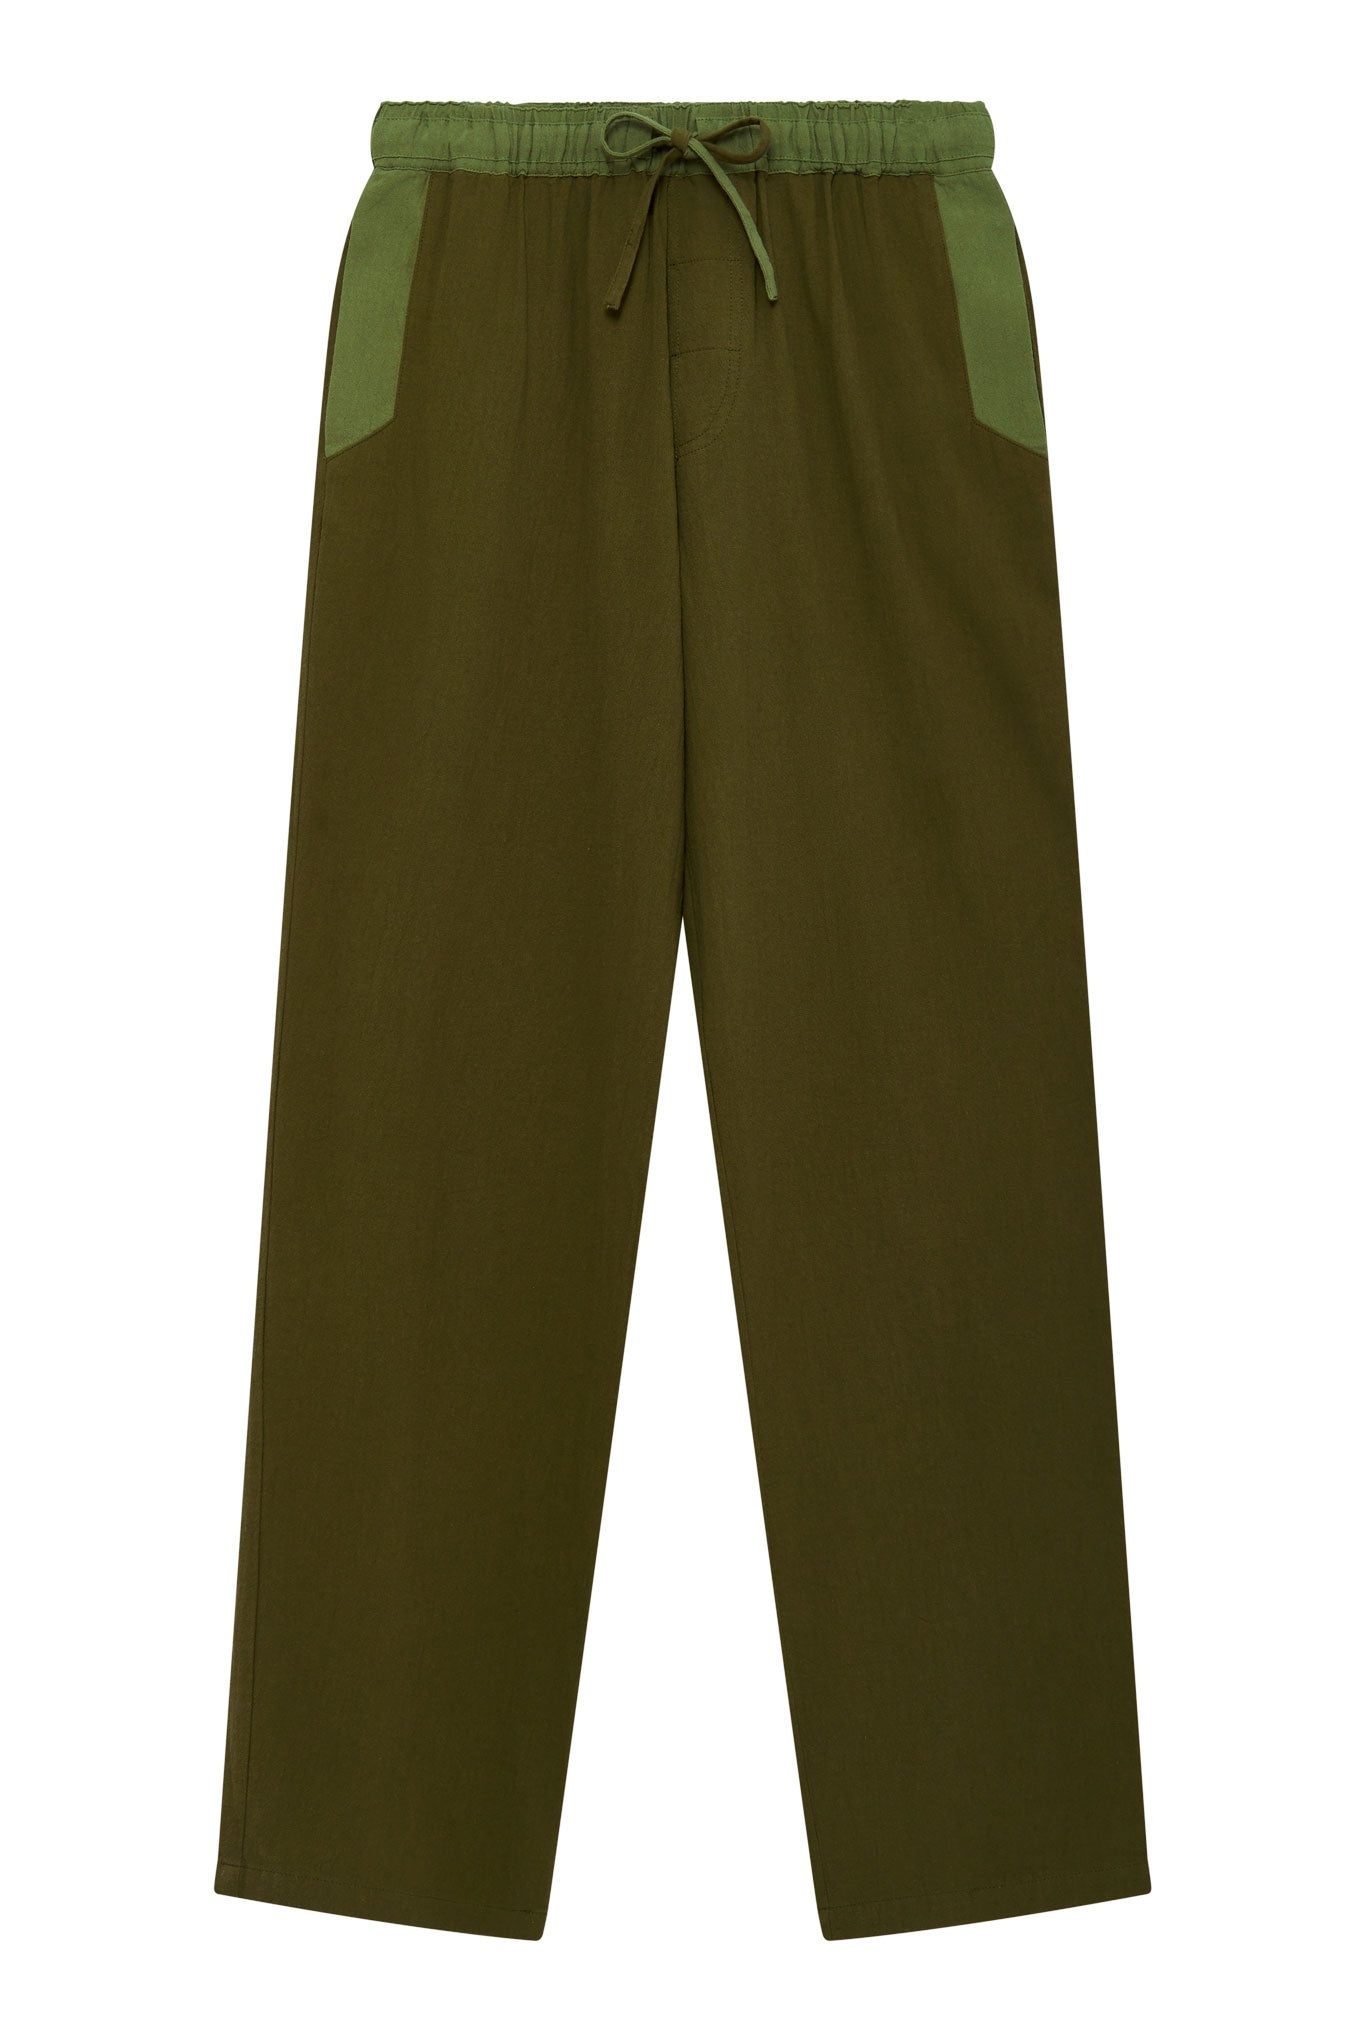 Komodo Men's Joshua - Organic Cotton Trouser Green Patchwork